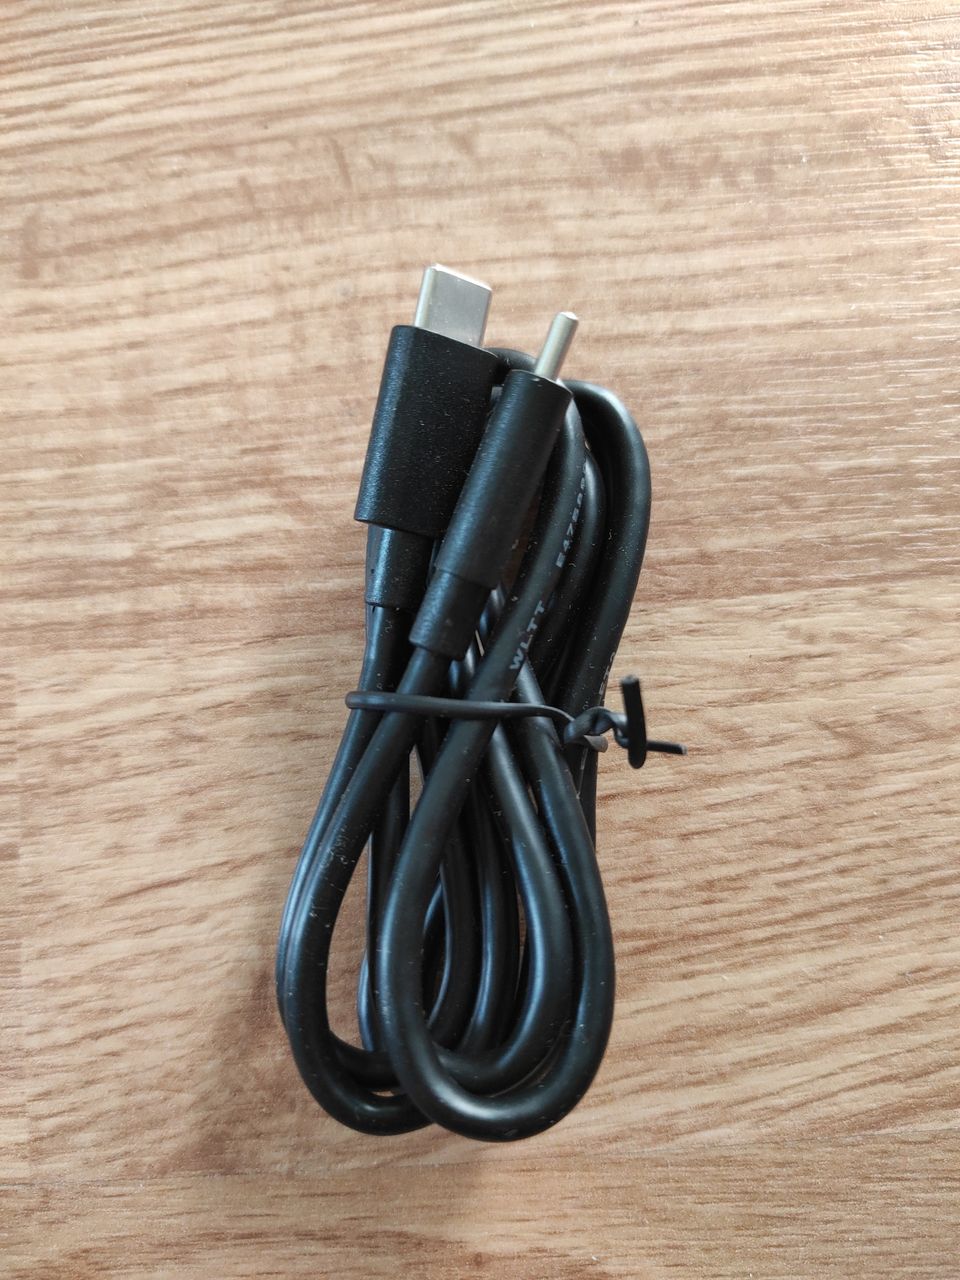 USB-C johto